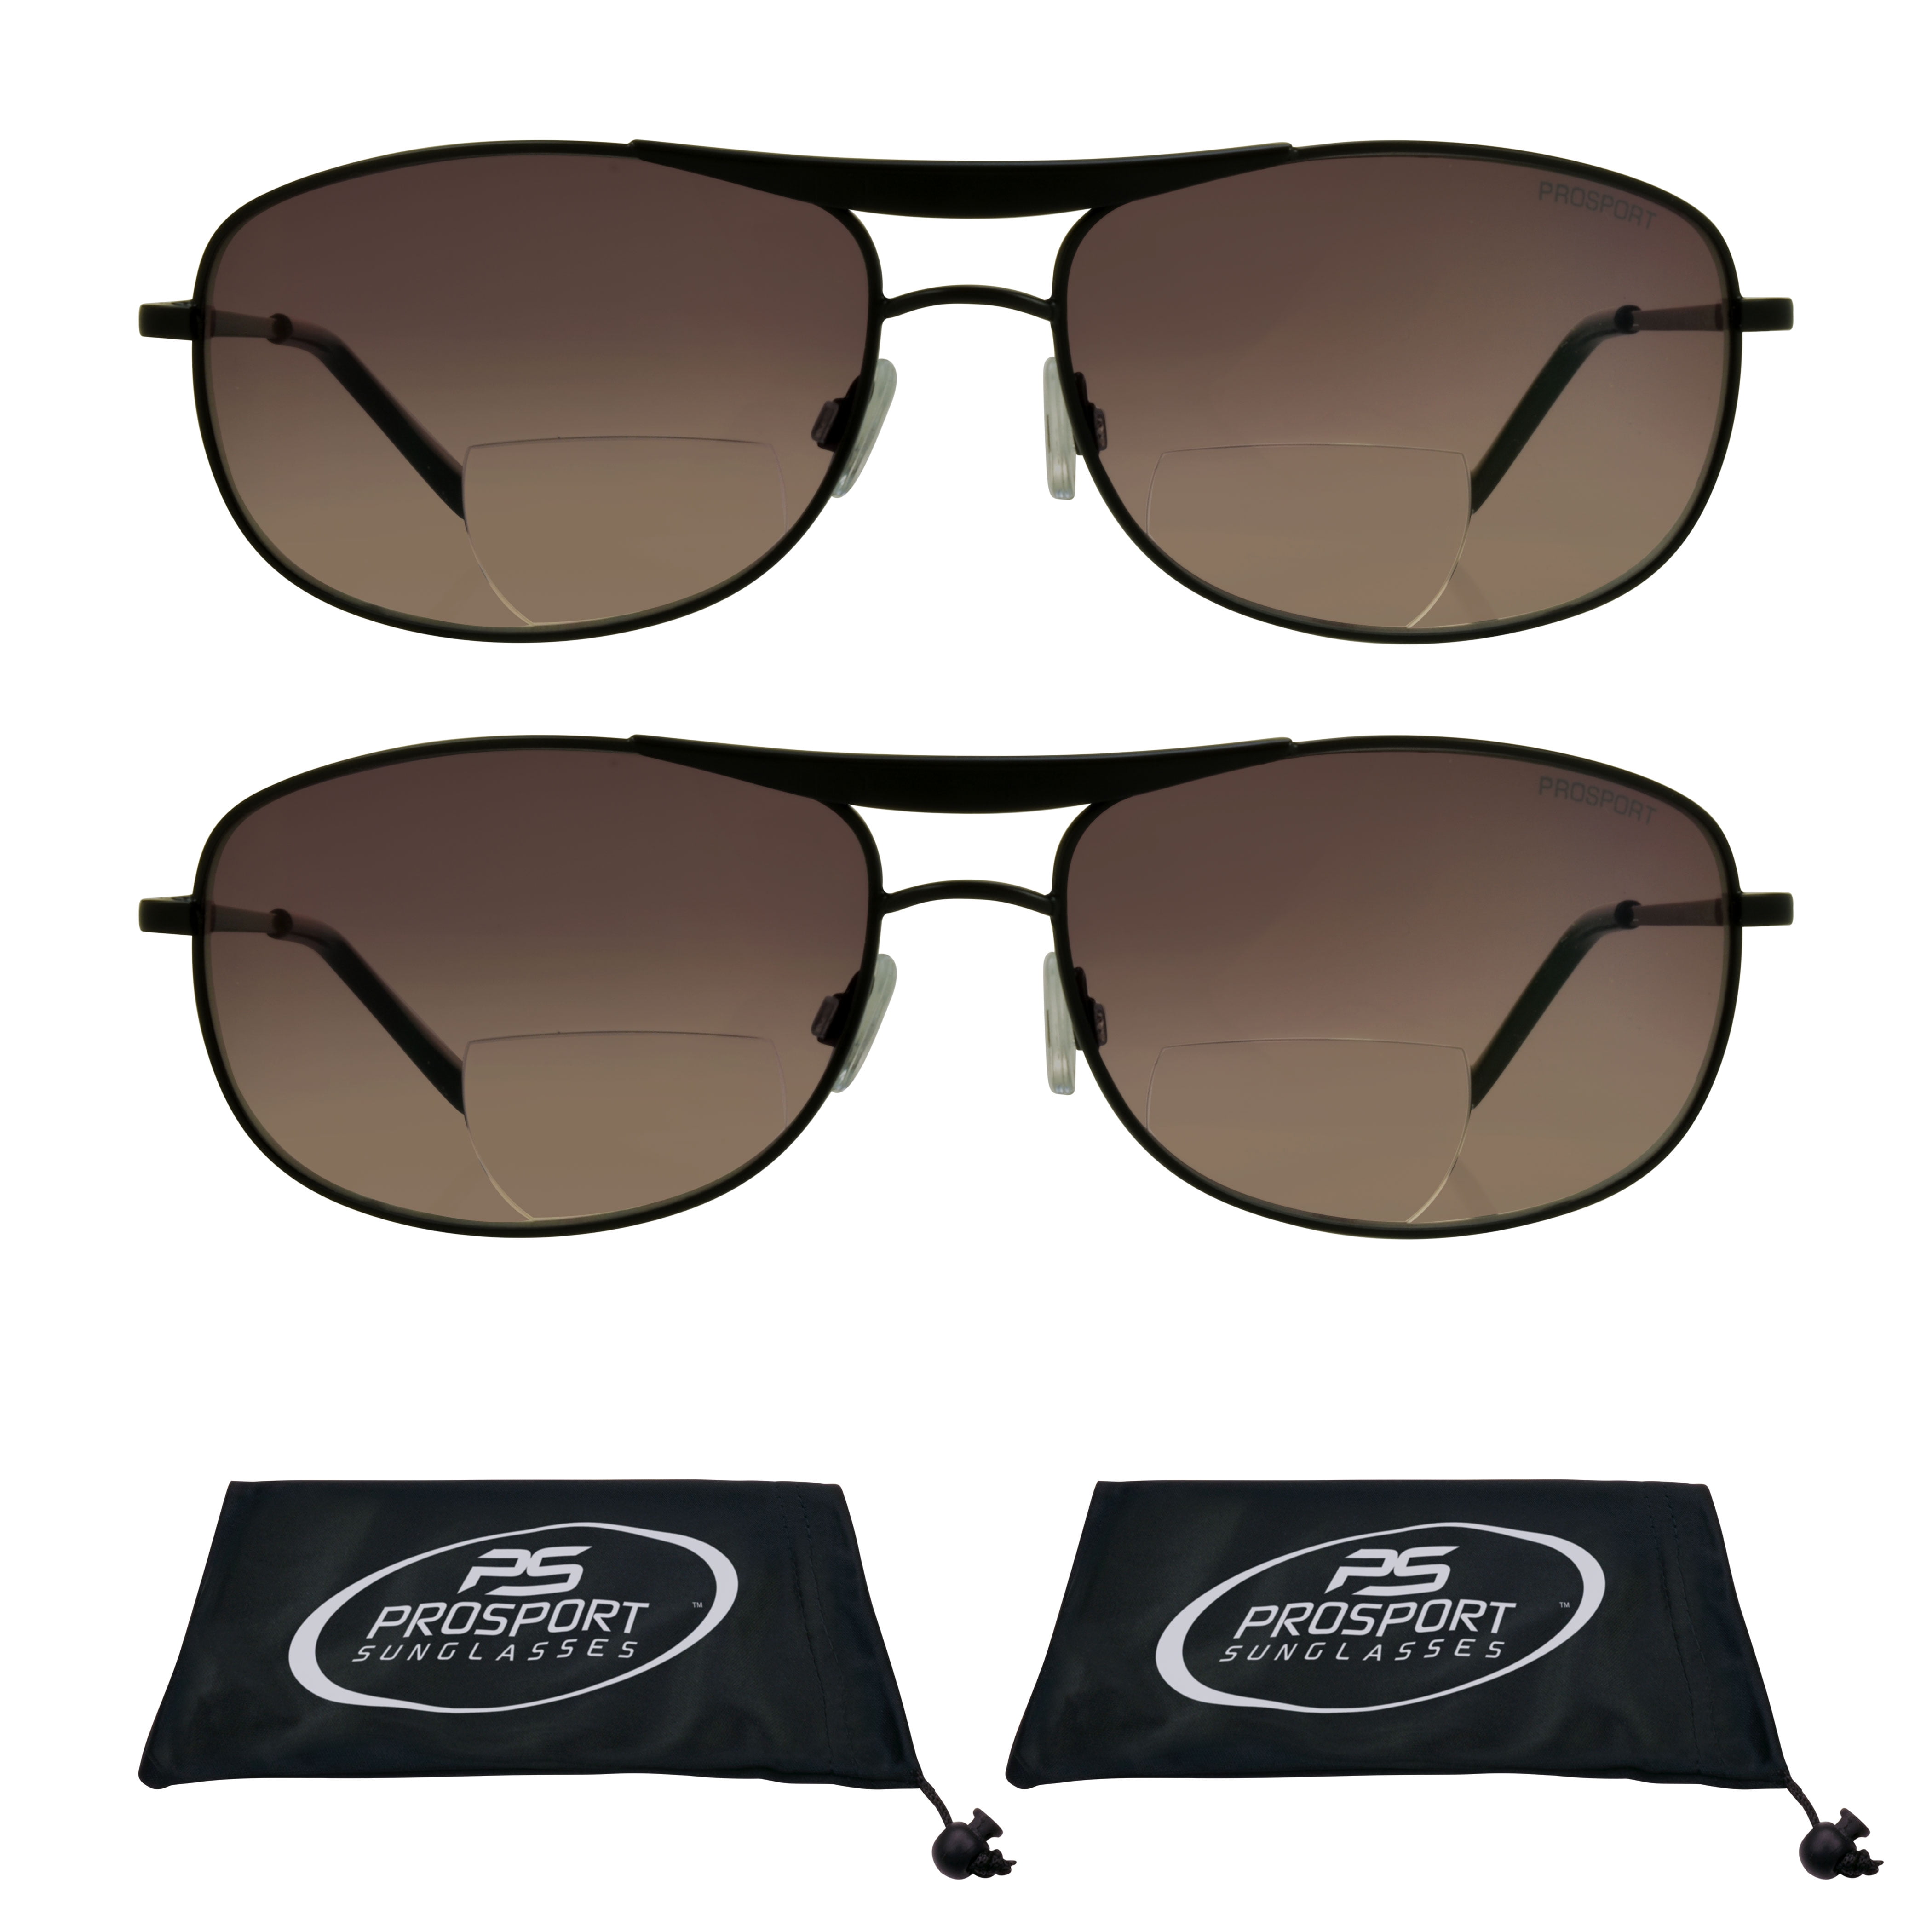 Prosport Aviator Bifocal Sunglasses Readers 2 00 2 Pairs Gunmetal Frame Gray Lens Men Women